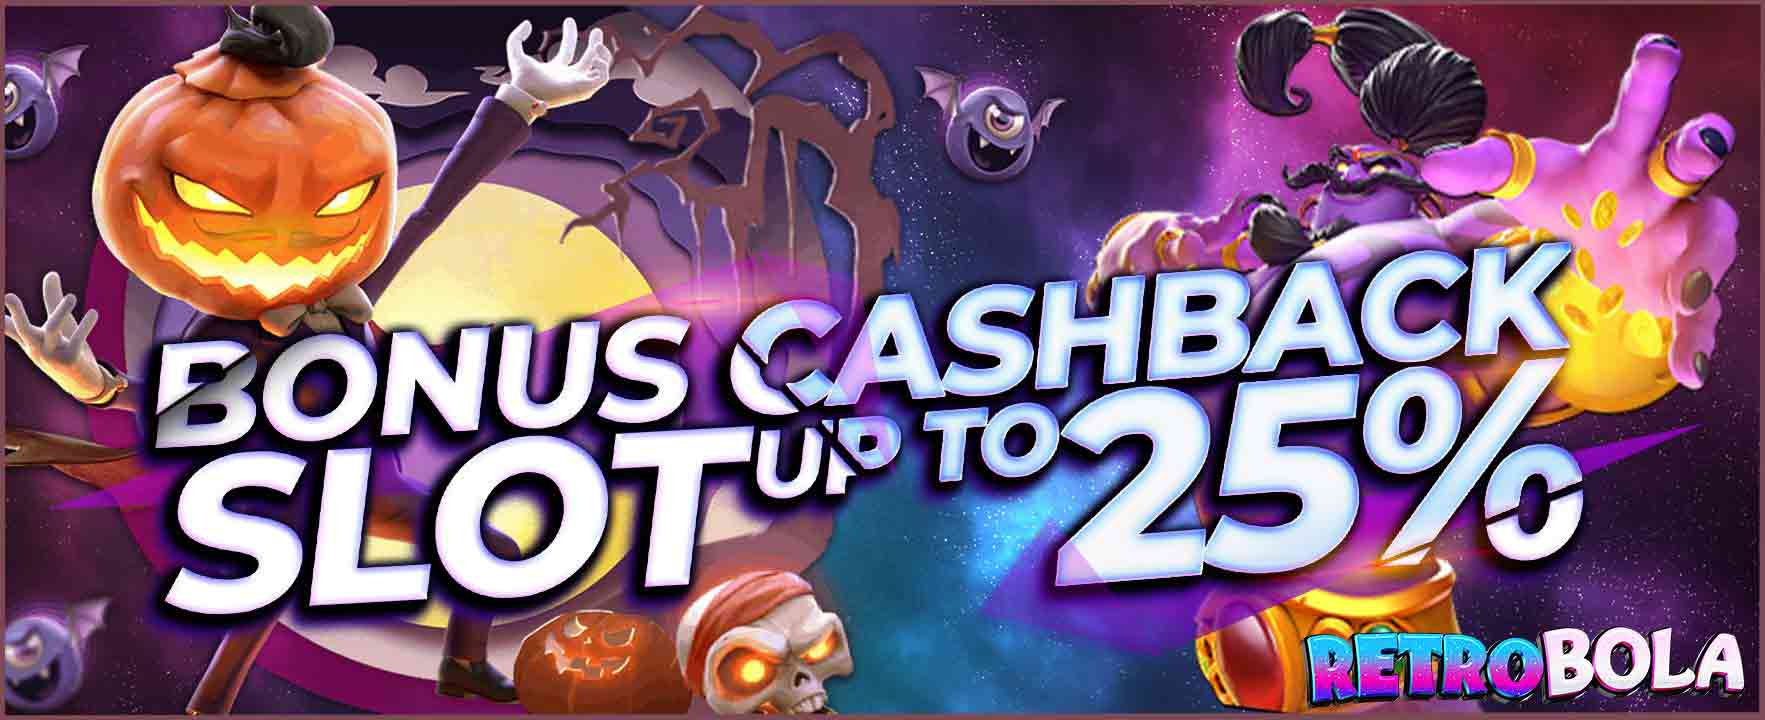 Bonus Cashback Khusus Slot Game Up to 25%